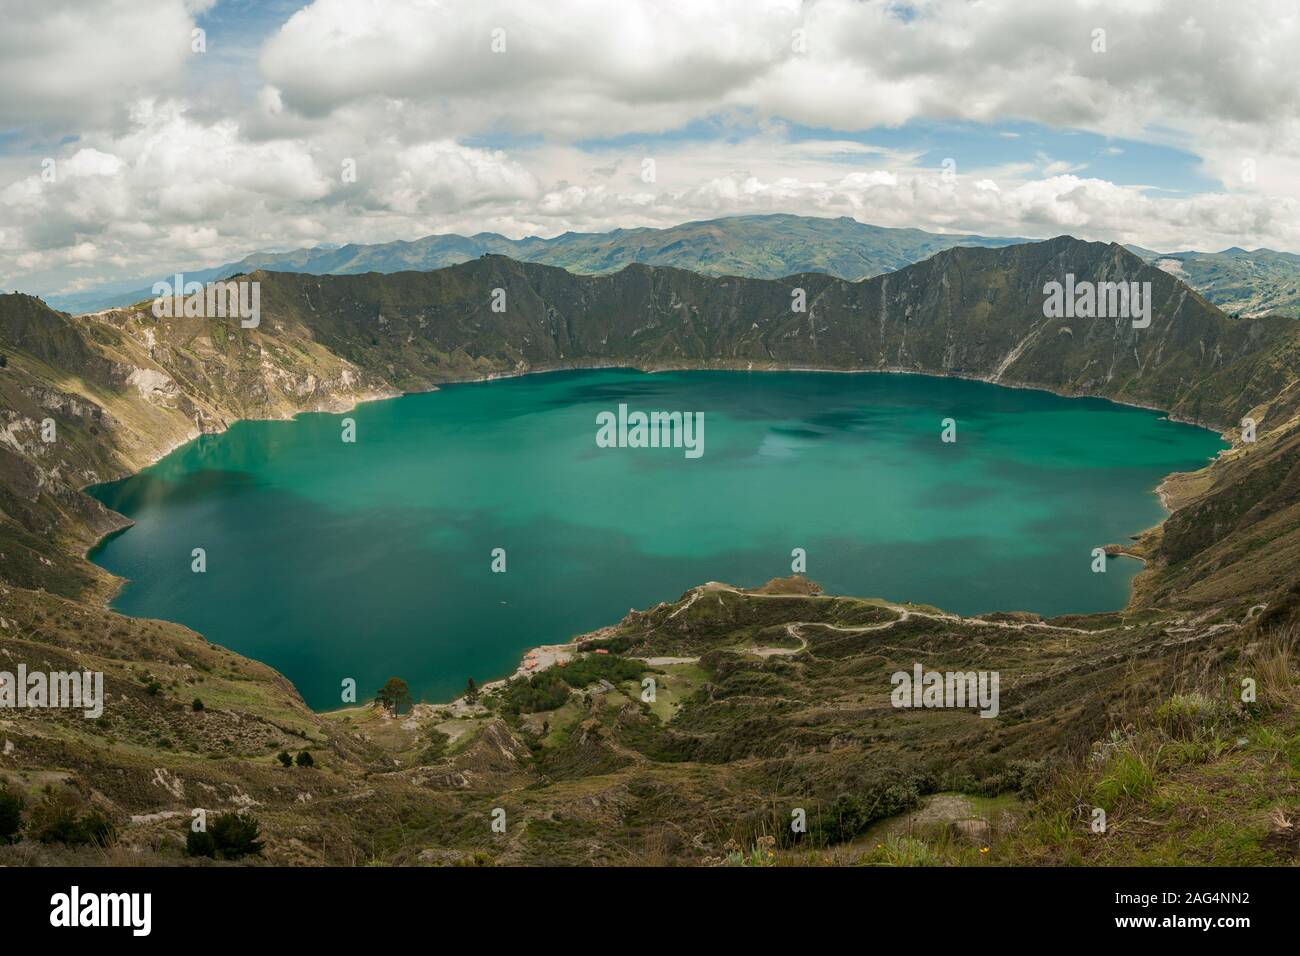 The lake in the caldera of the Quilotoa volcano in Ecuador. Stock Photo